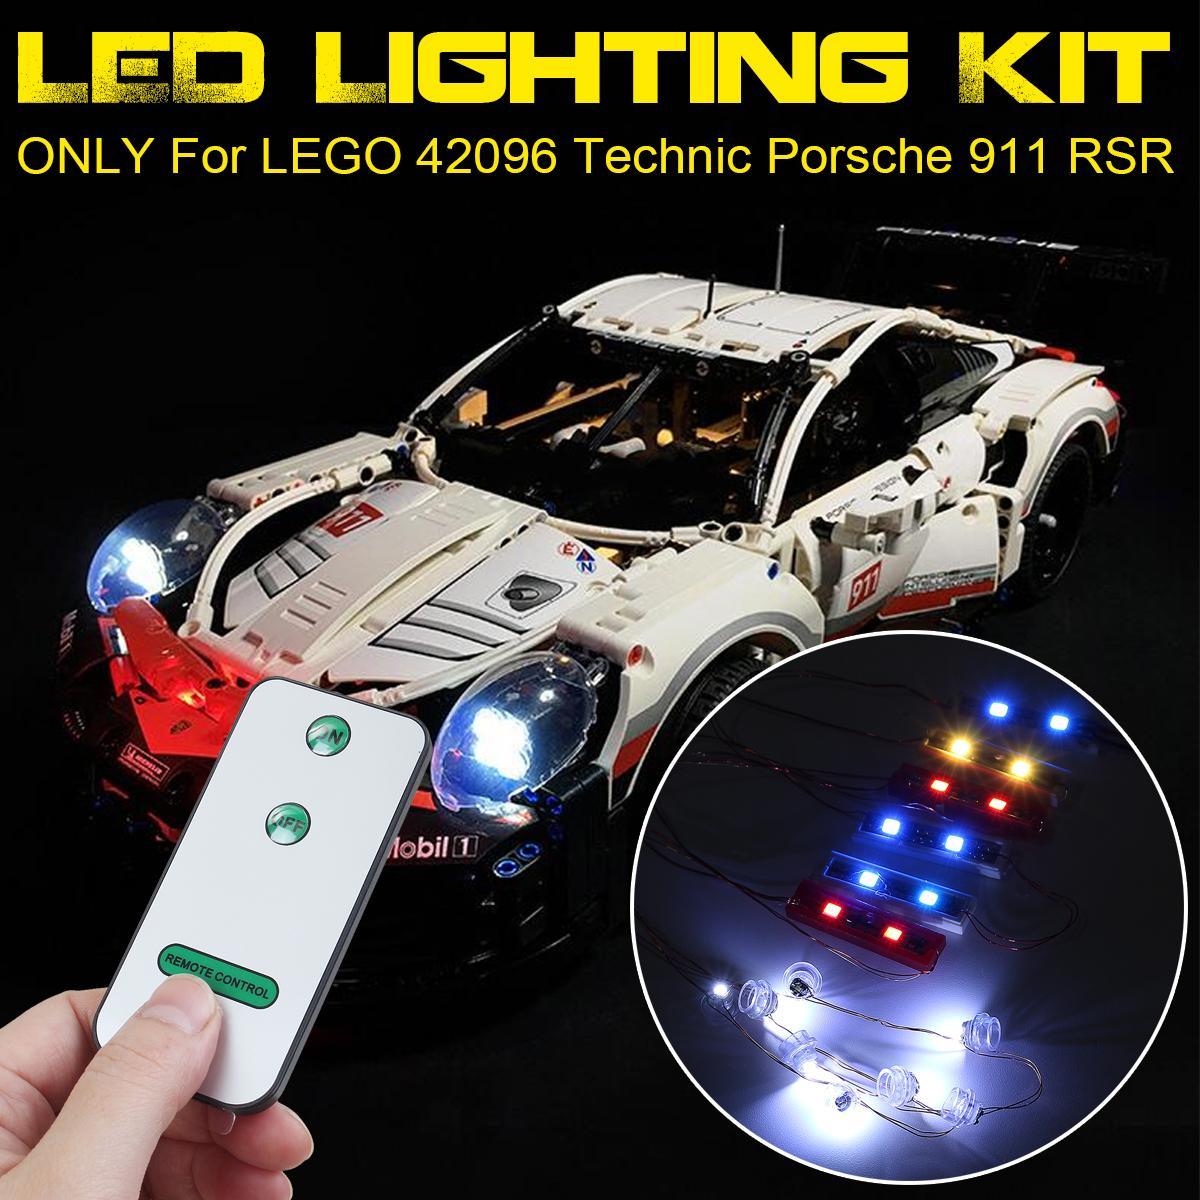 DIY LED Light Lighting Kit ONLY For LEGO 42096 Technic 911 RSR Bricks+Remote Control